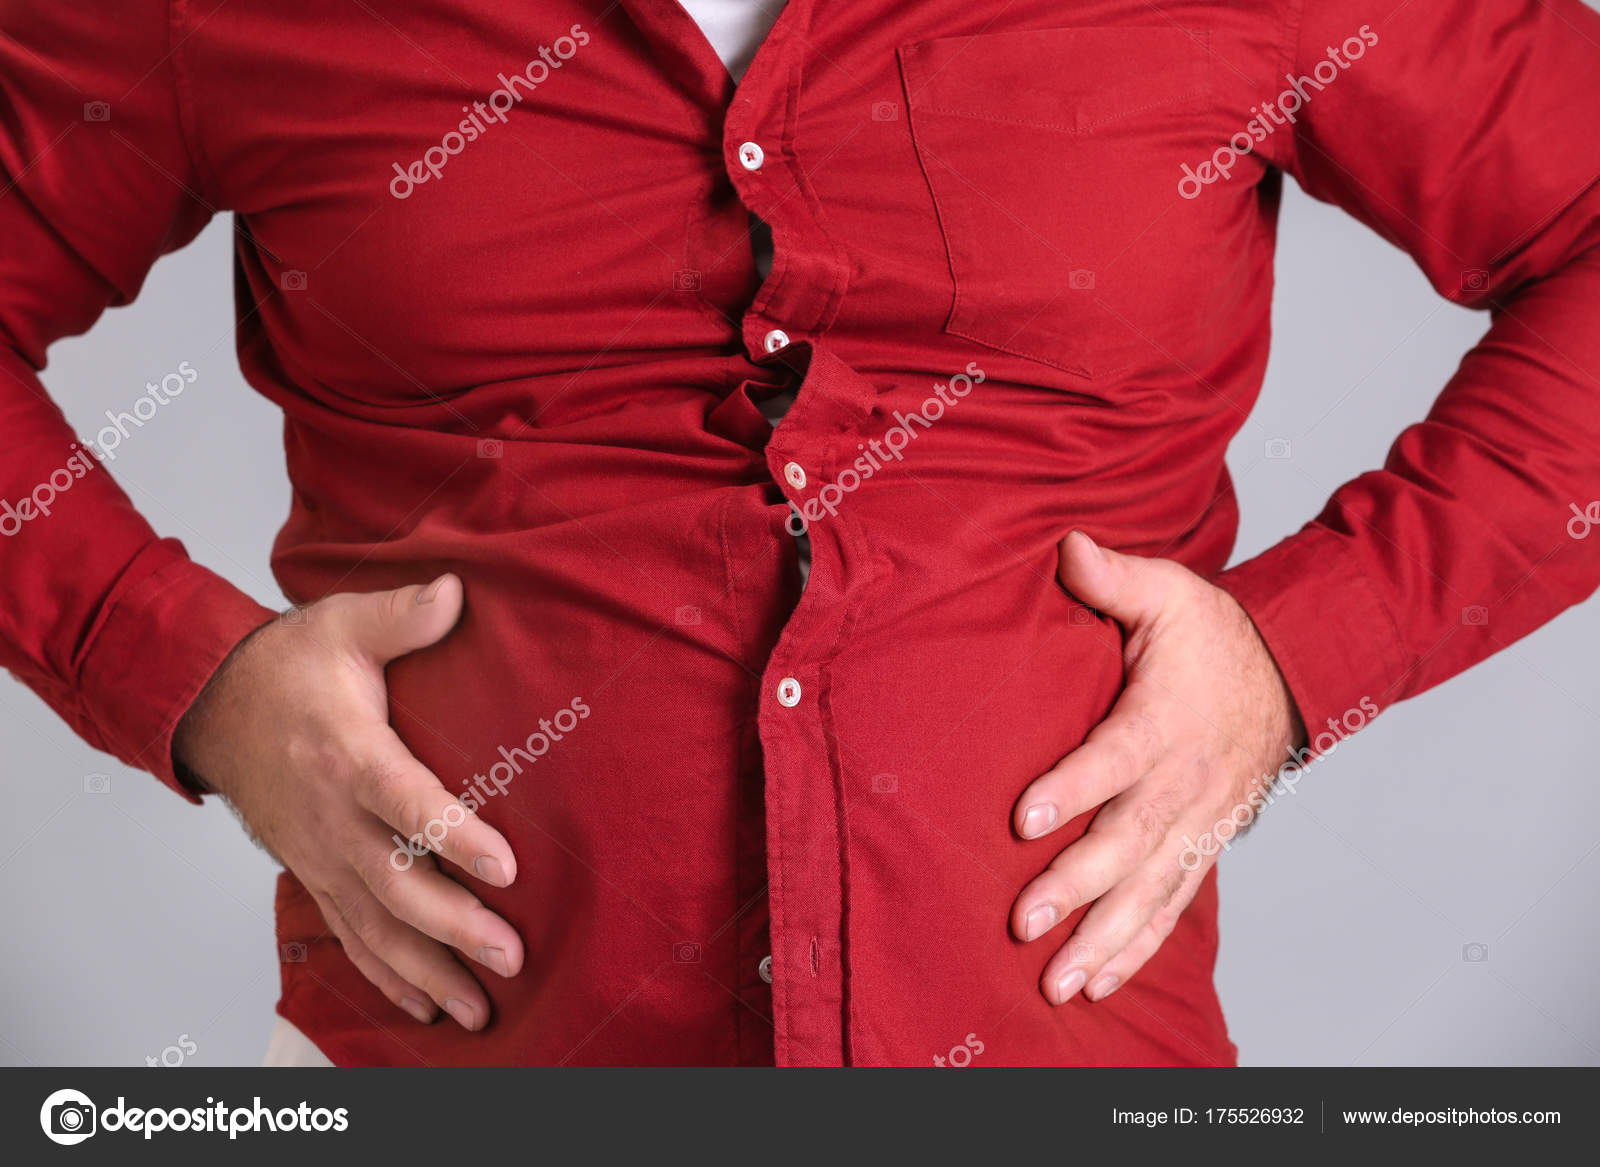 tight red shirt